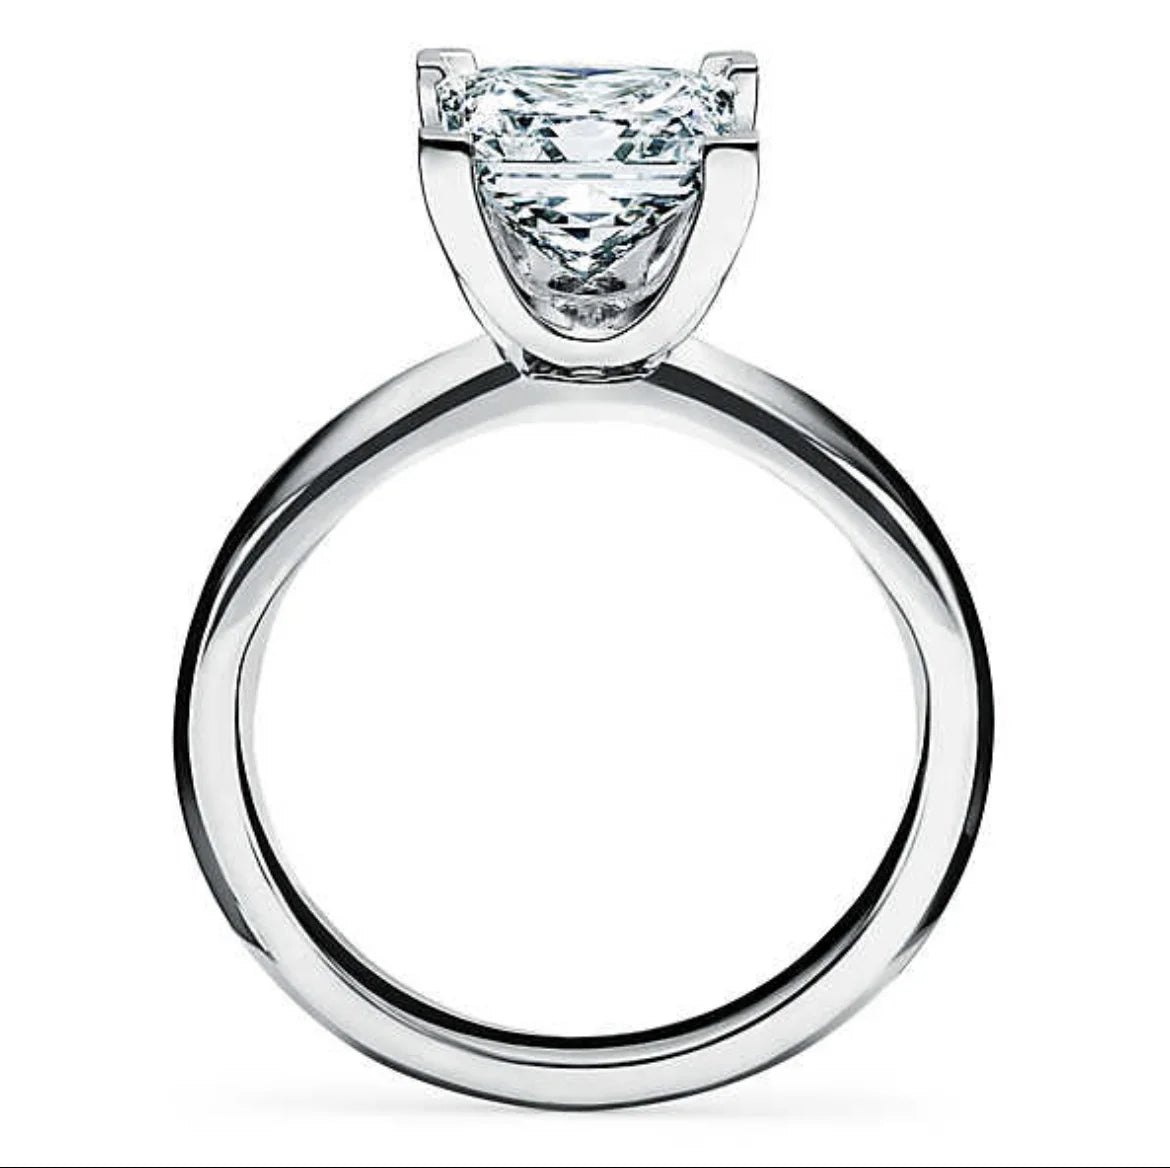 Diamond Engagement Rings - Princess Cut. 1.0 To 2.0 Carat.